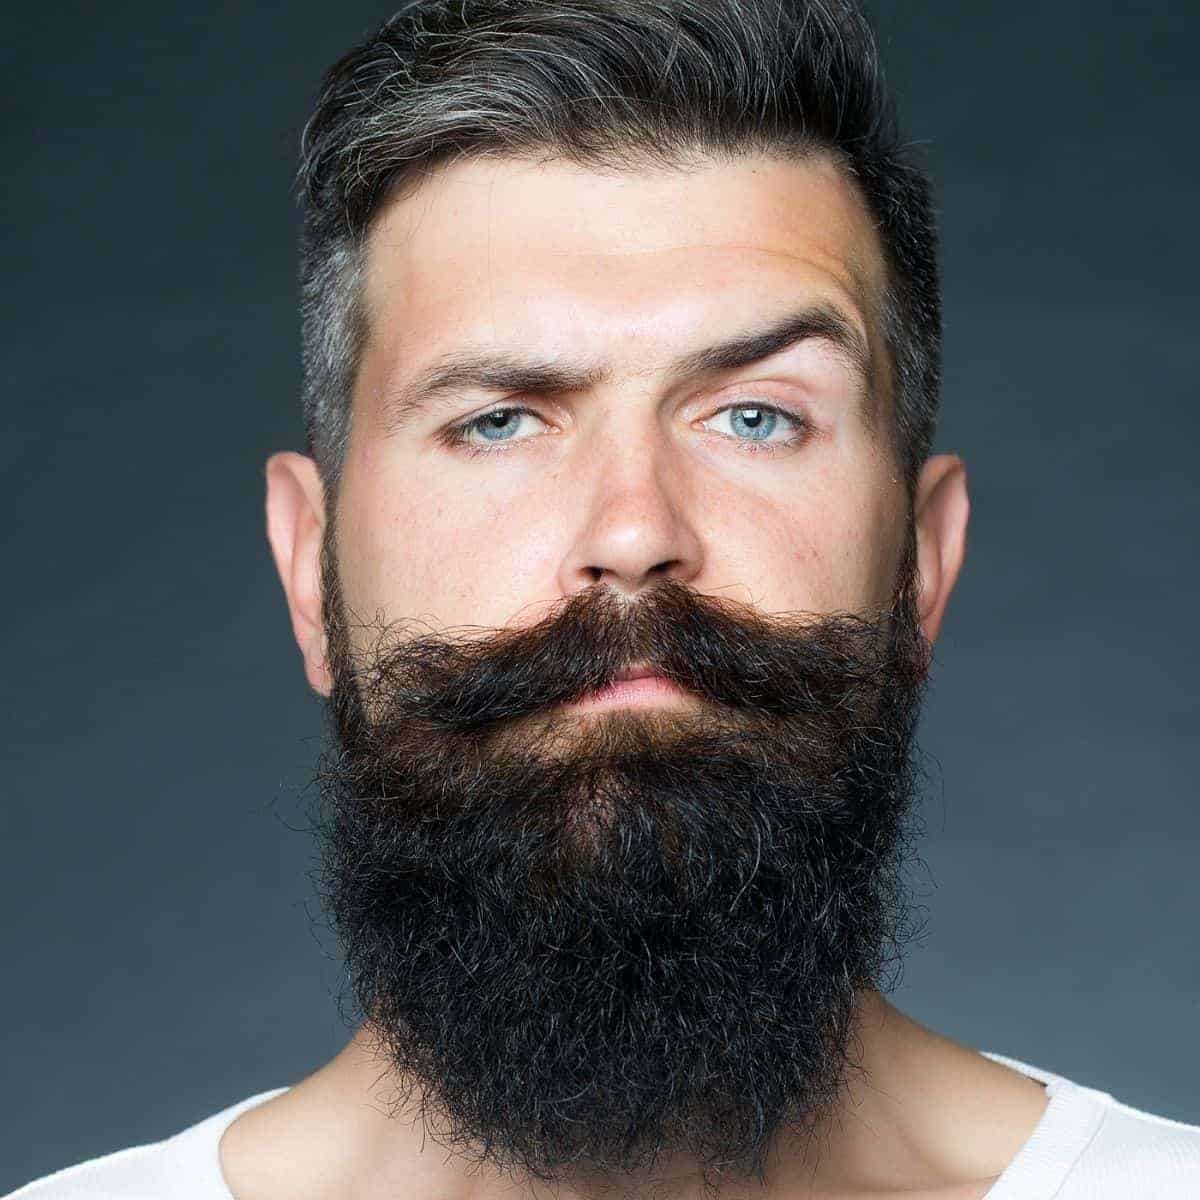 Person with a beard raising their eyebrow.